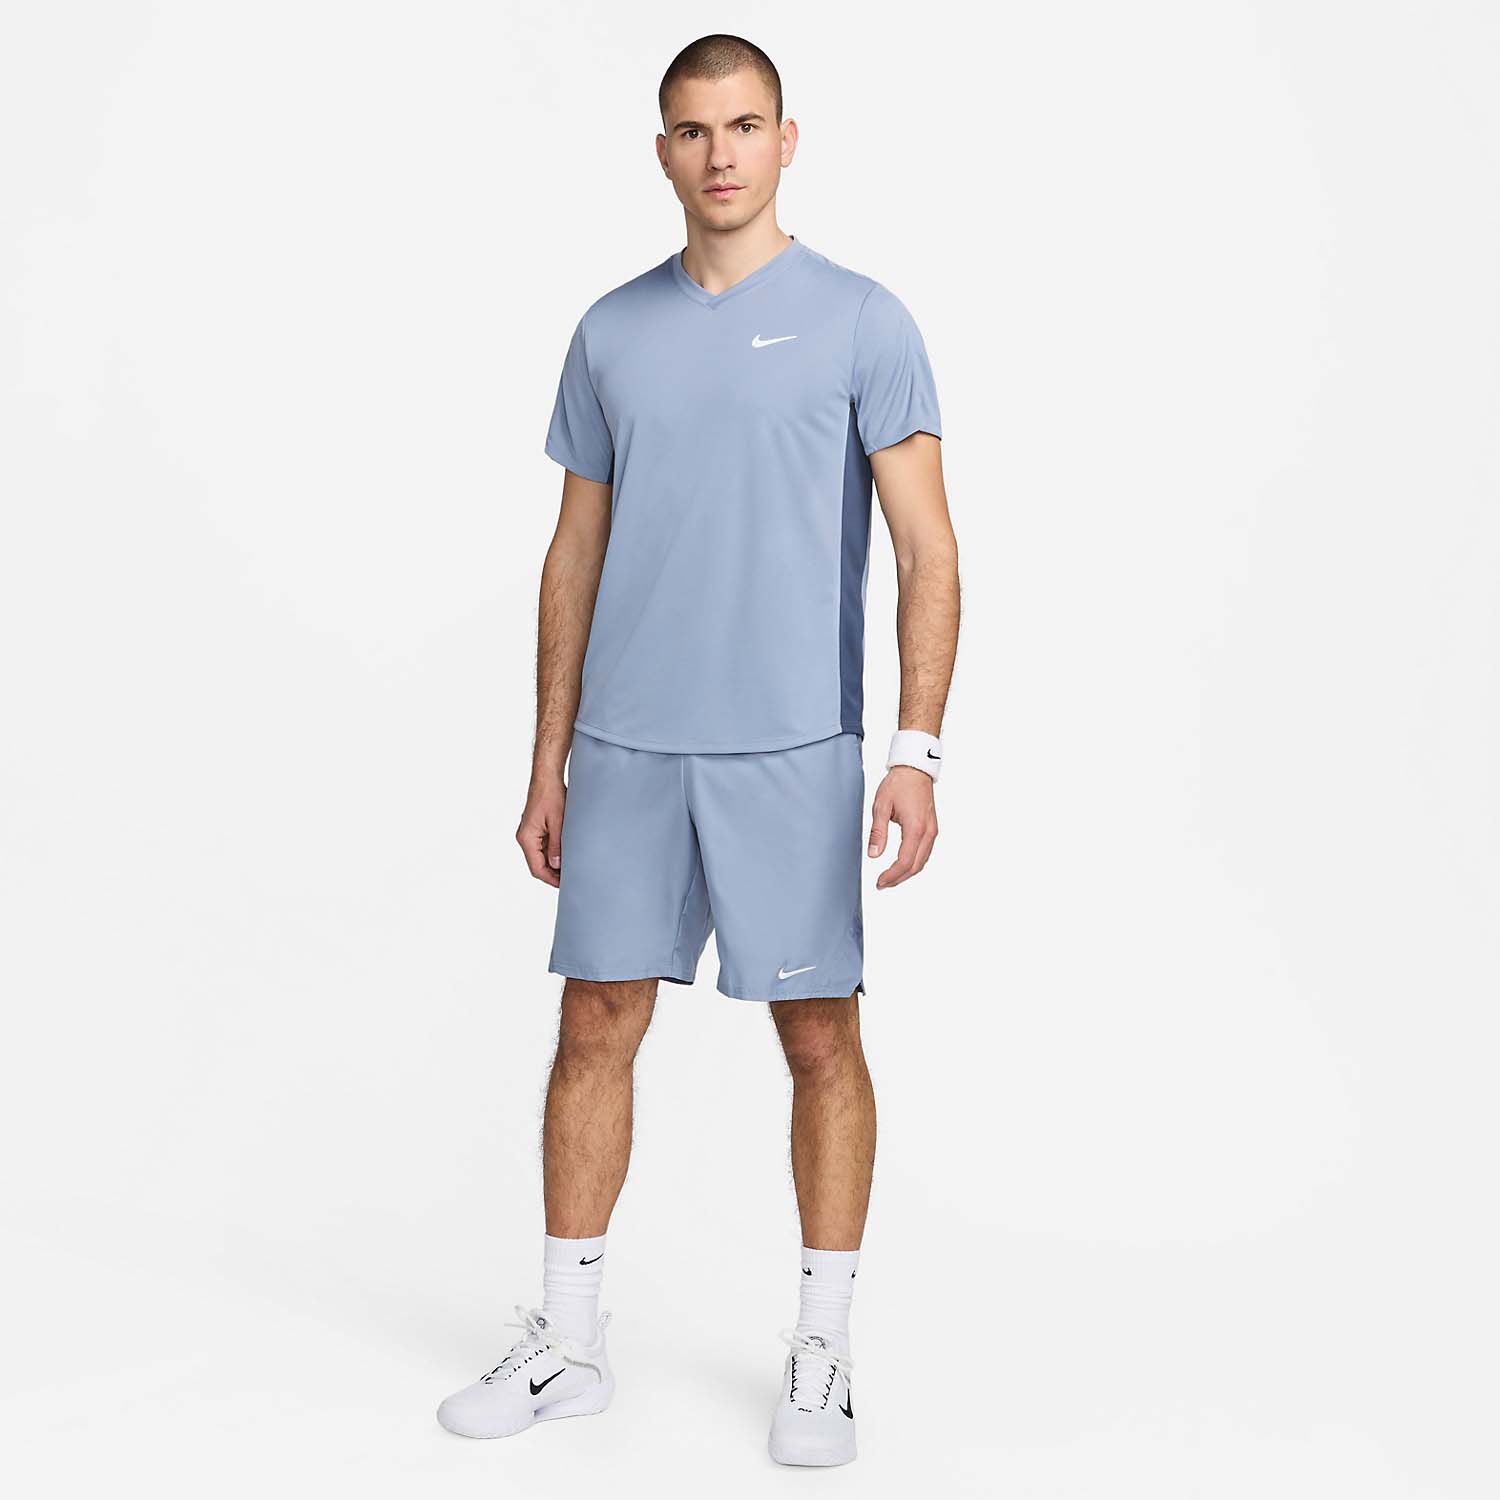 Nike Victory T-Shirt - Ashen Slate/Thunder Blue/White